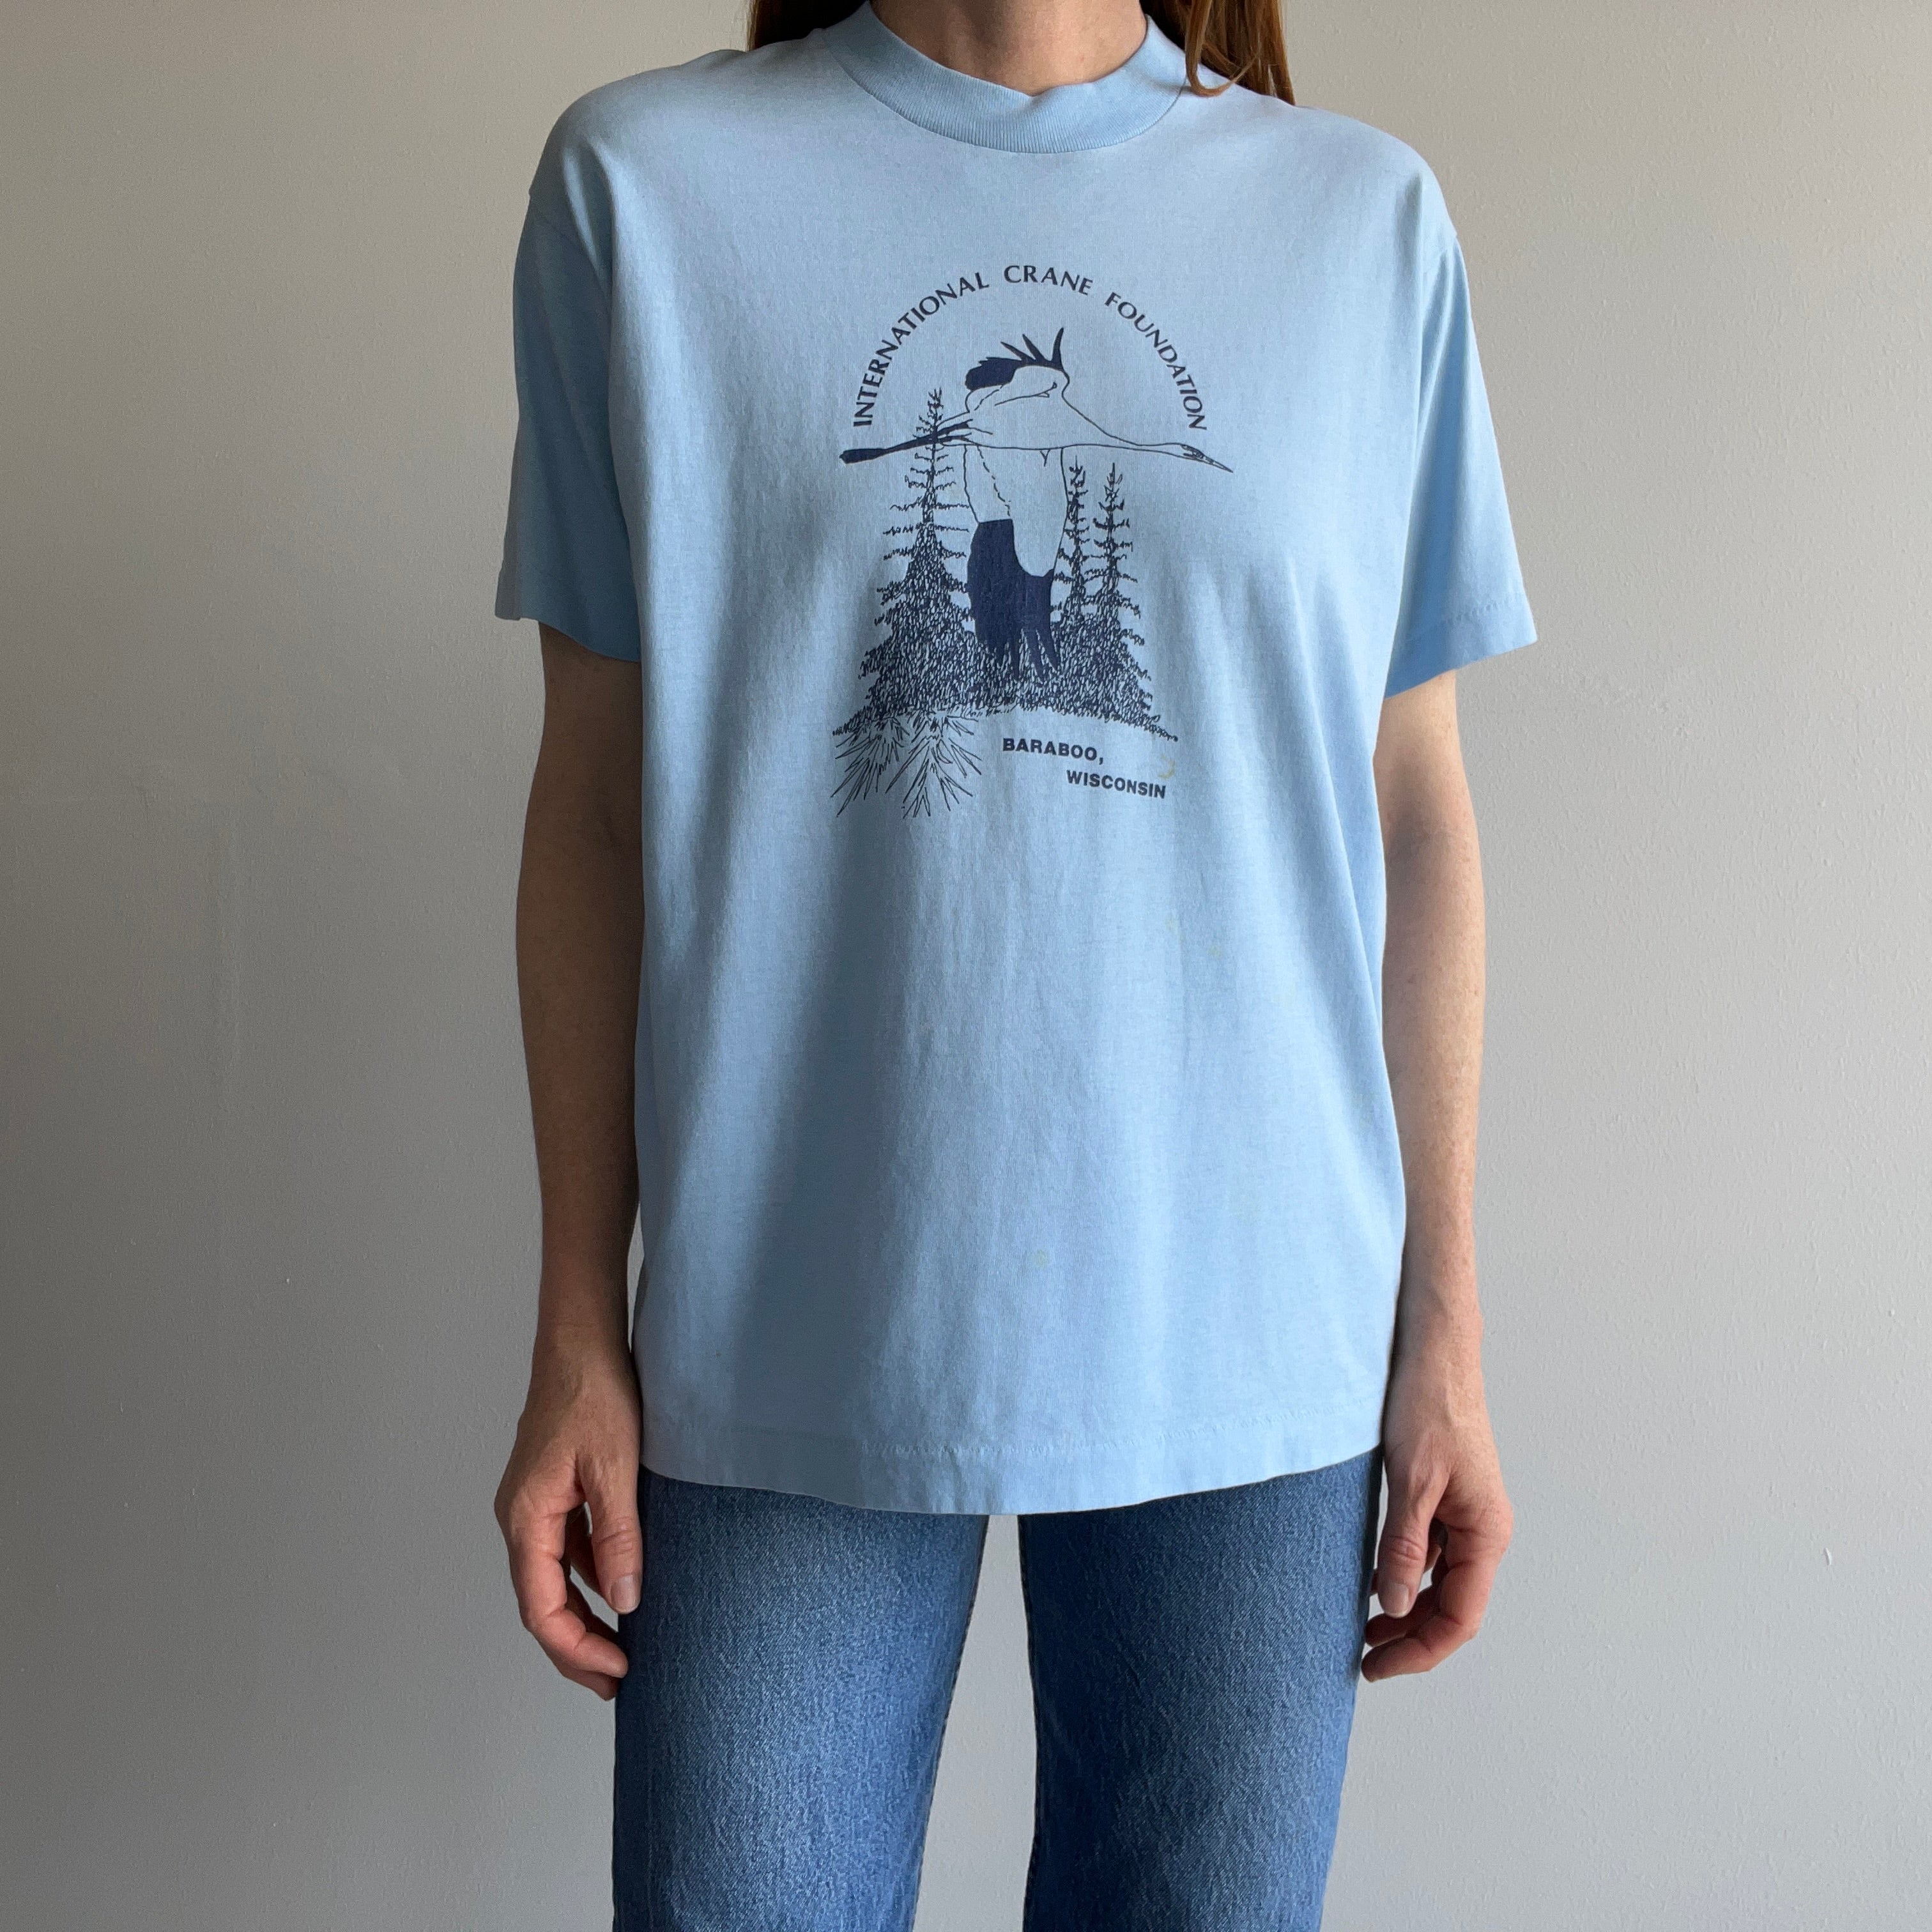 1980s International Crane Foundation Baraboo, Wisconsin T-Shirt